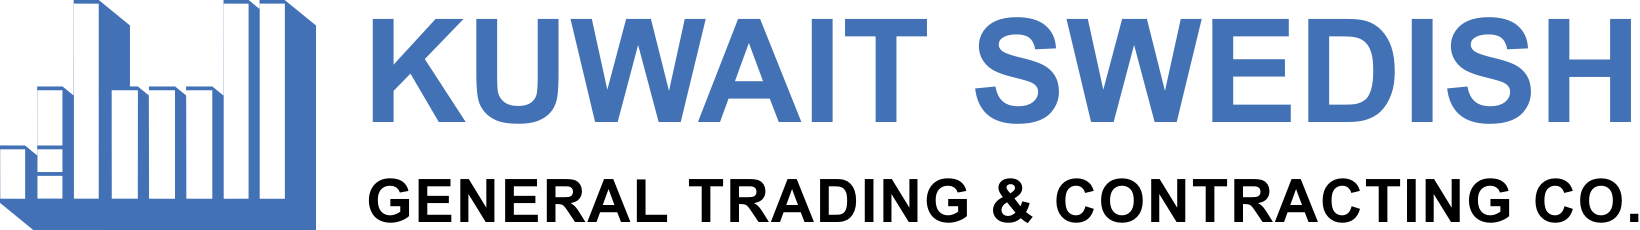 Kuwait Swedish Logo